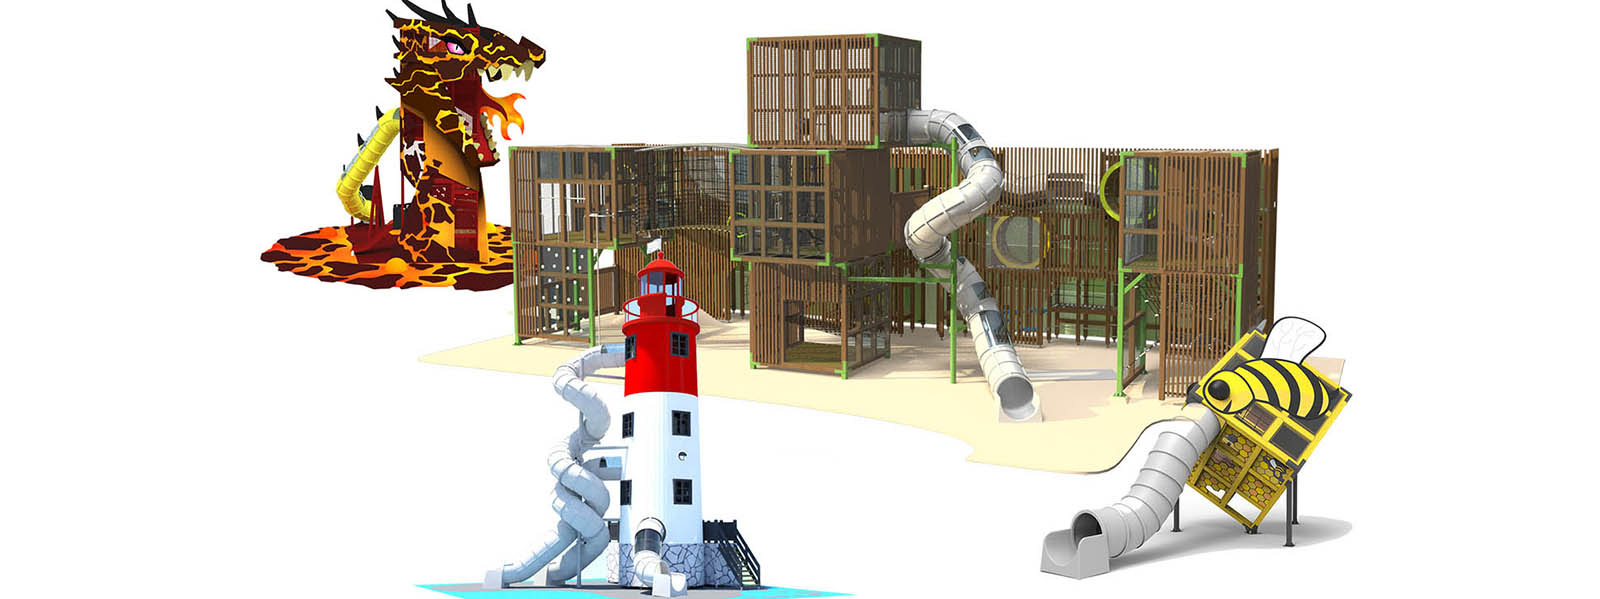 Bespoke playground renderings: Vertical Maze, Dragon, Lighthouse, Beehive